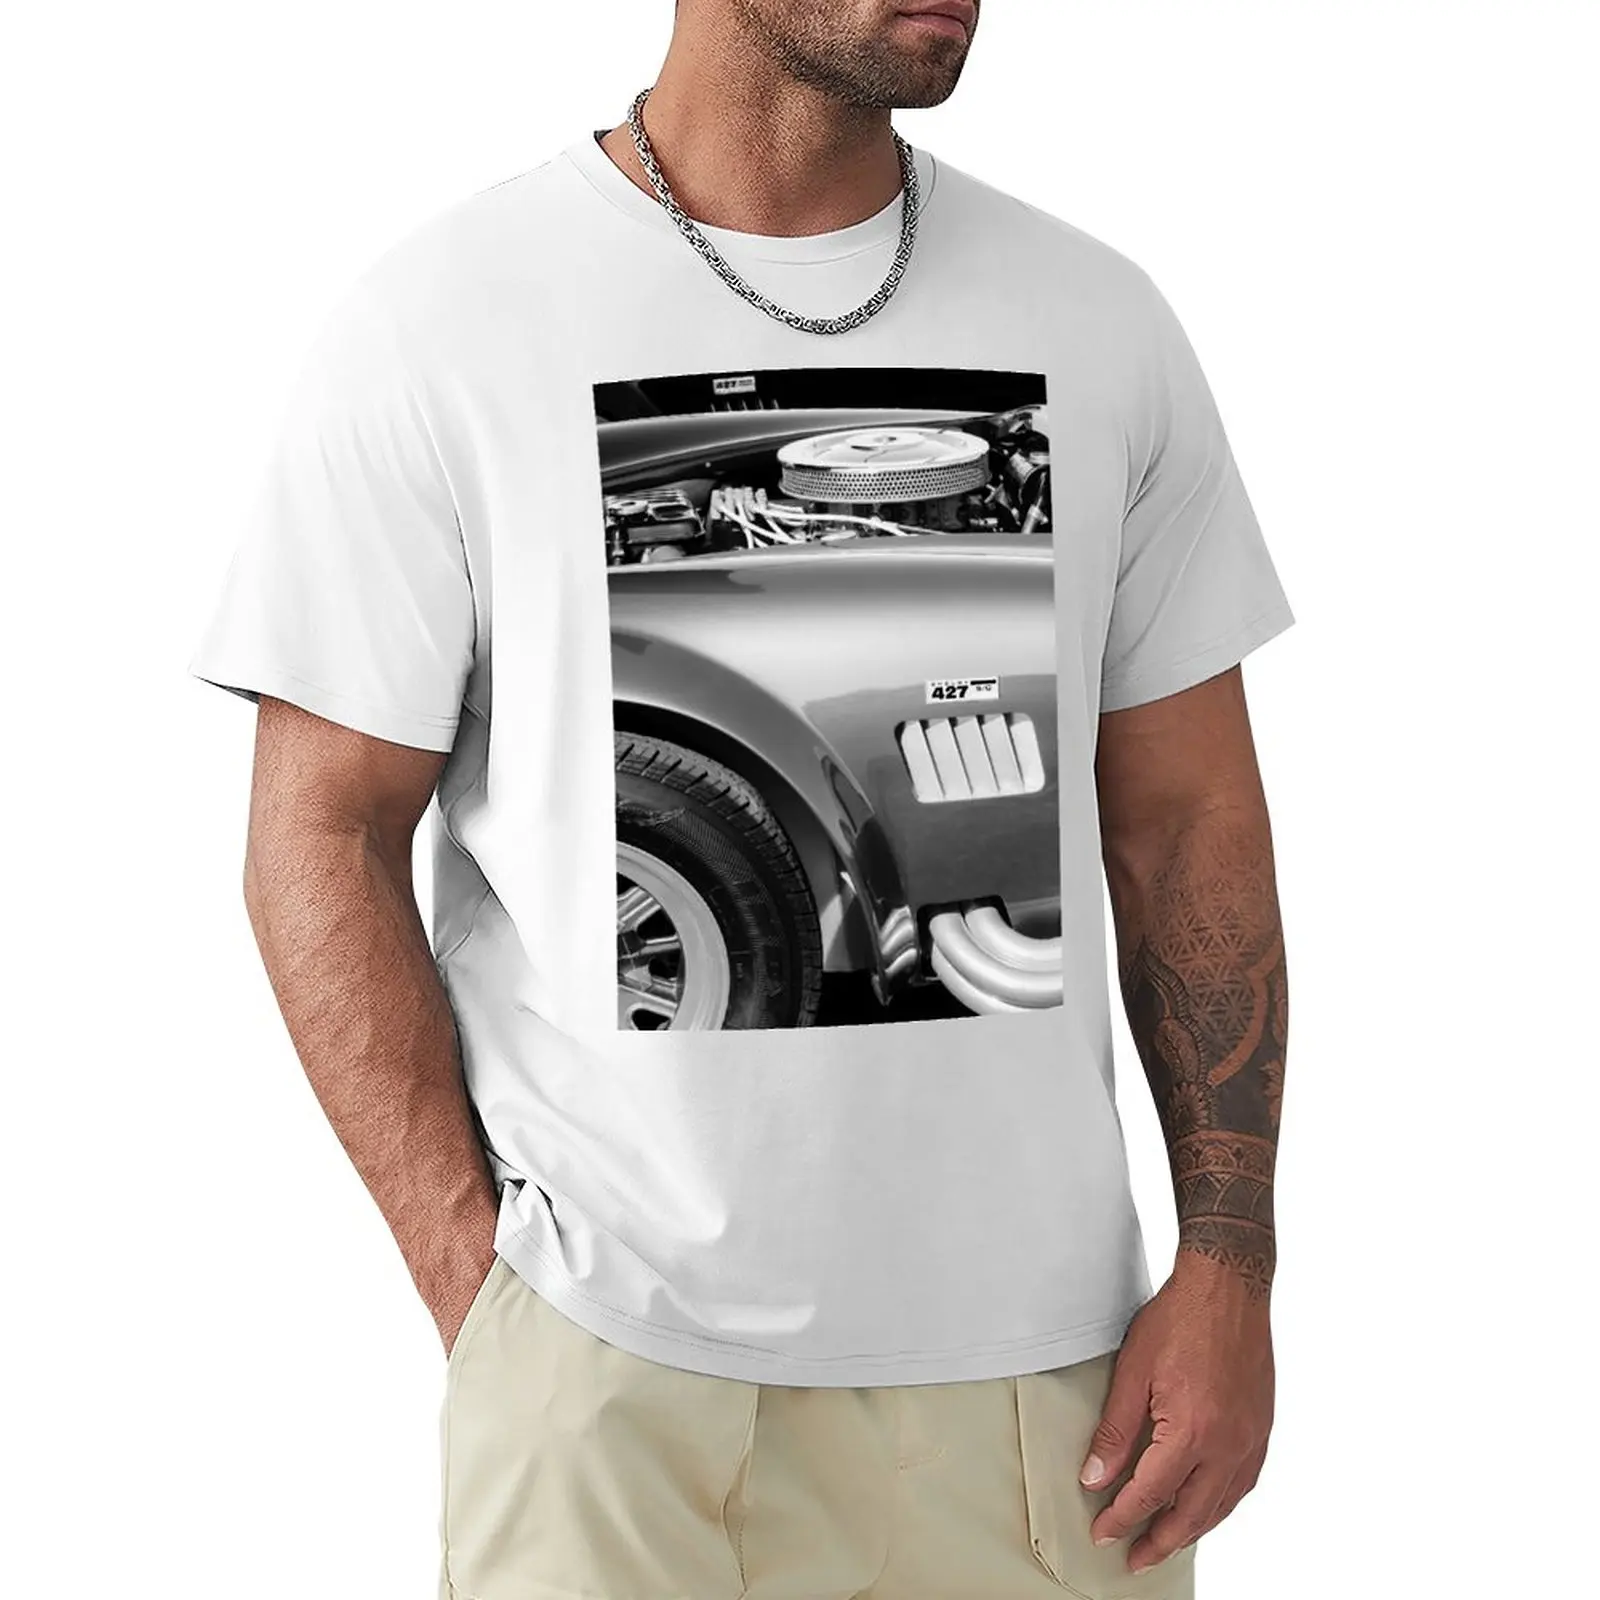 Футболка Shelby Cobra 427 Engine -0998bw, изготовленная на заказ, футболка, мужские футболки чемпиона